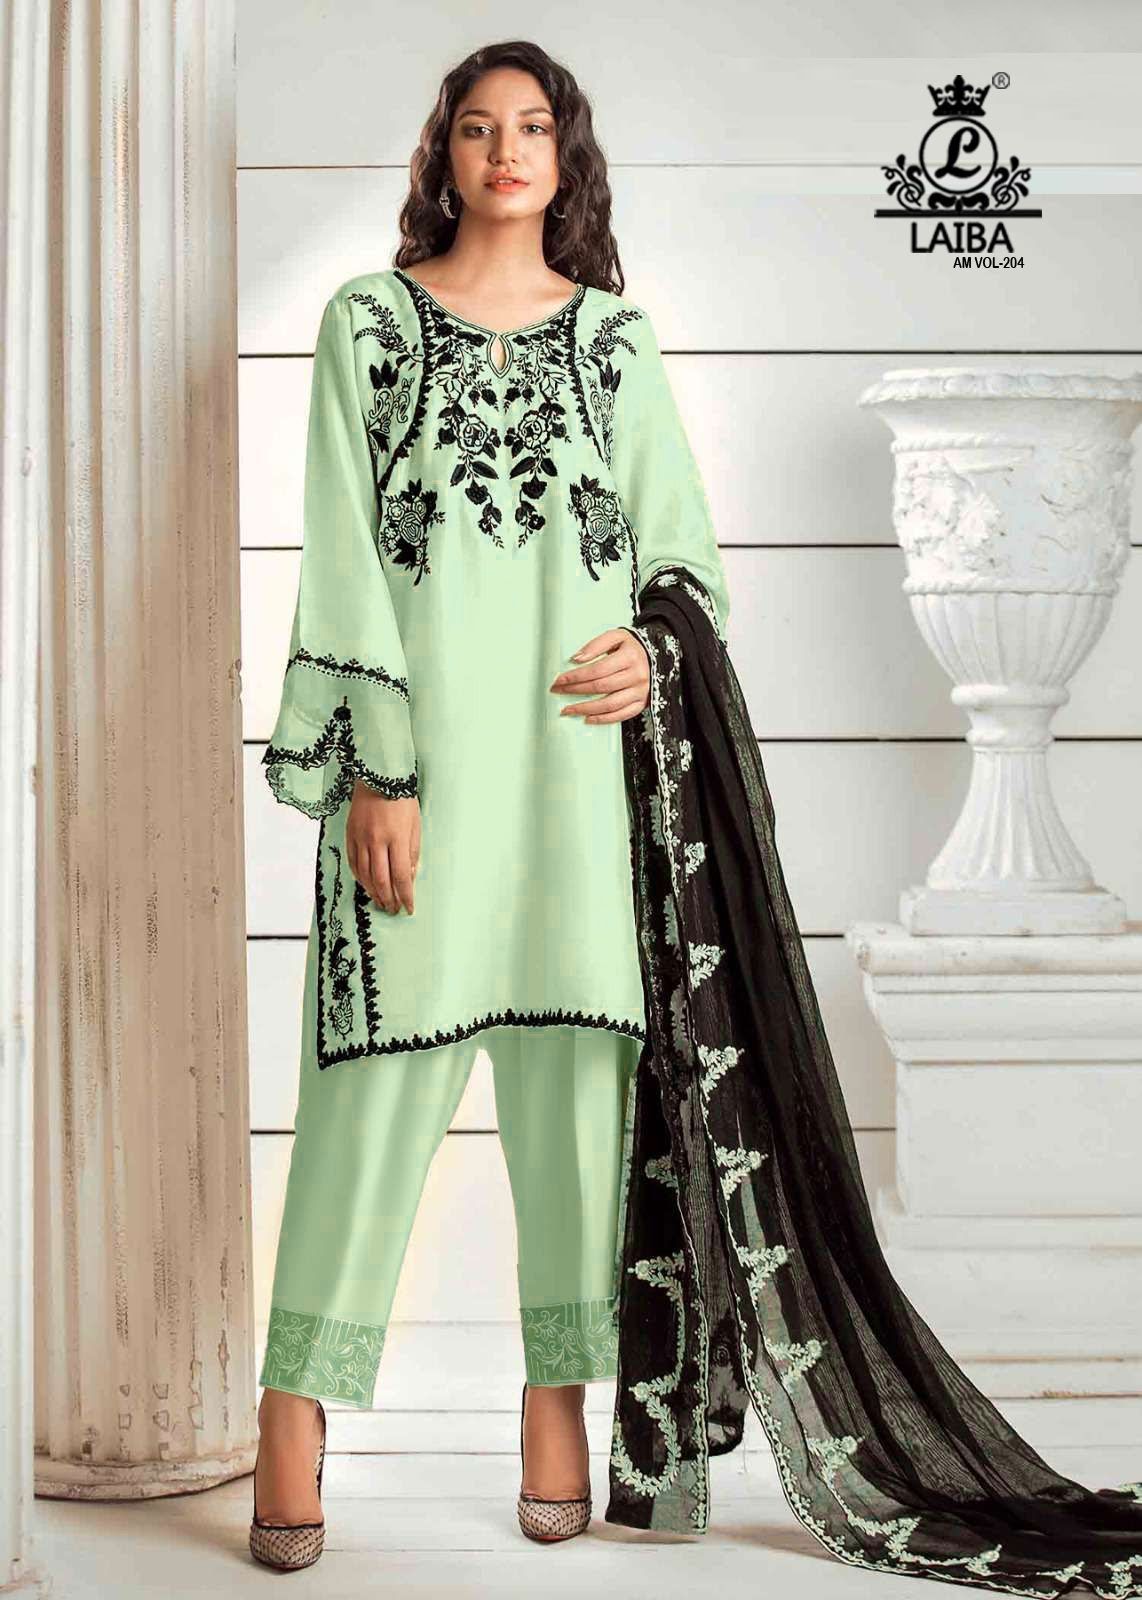 Am Vol 204 Laiba Georgette Pakistani Readymade Suits